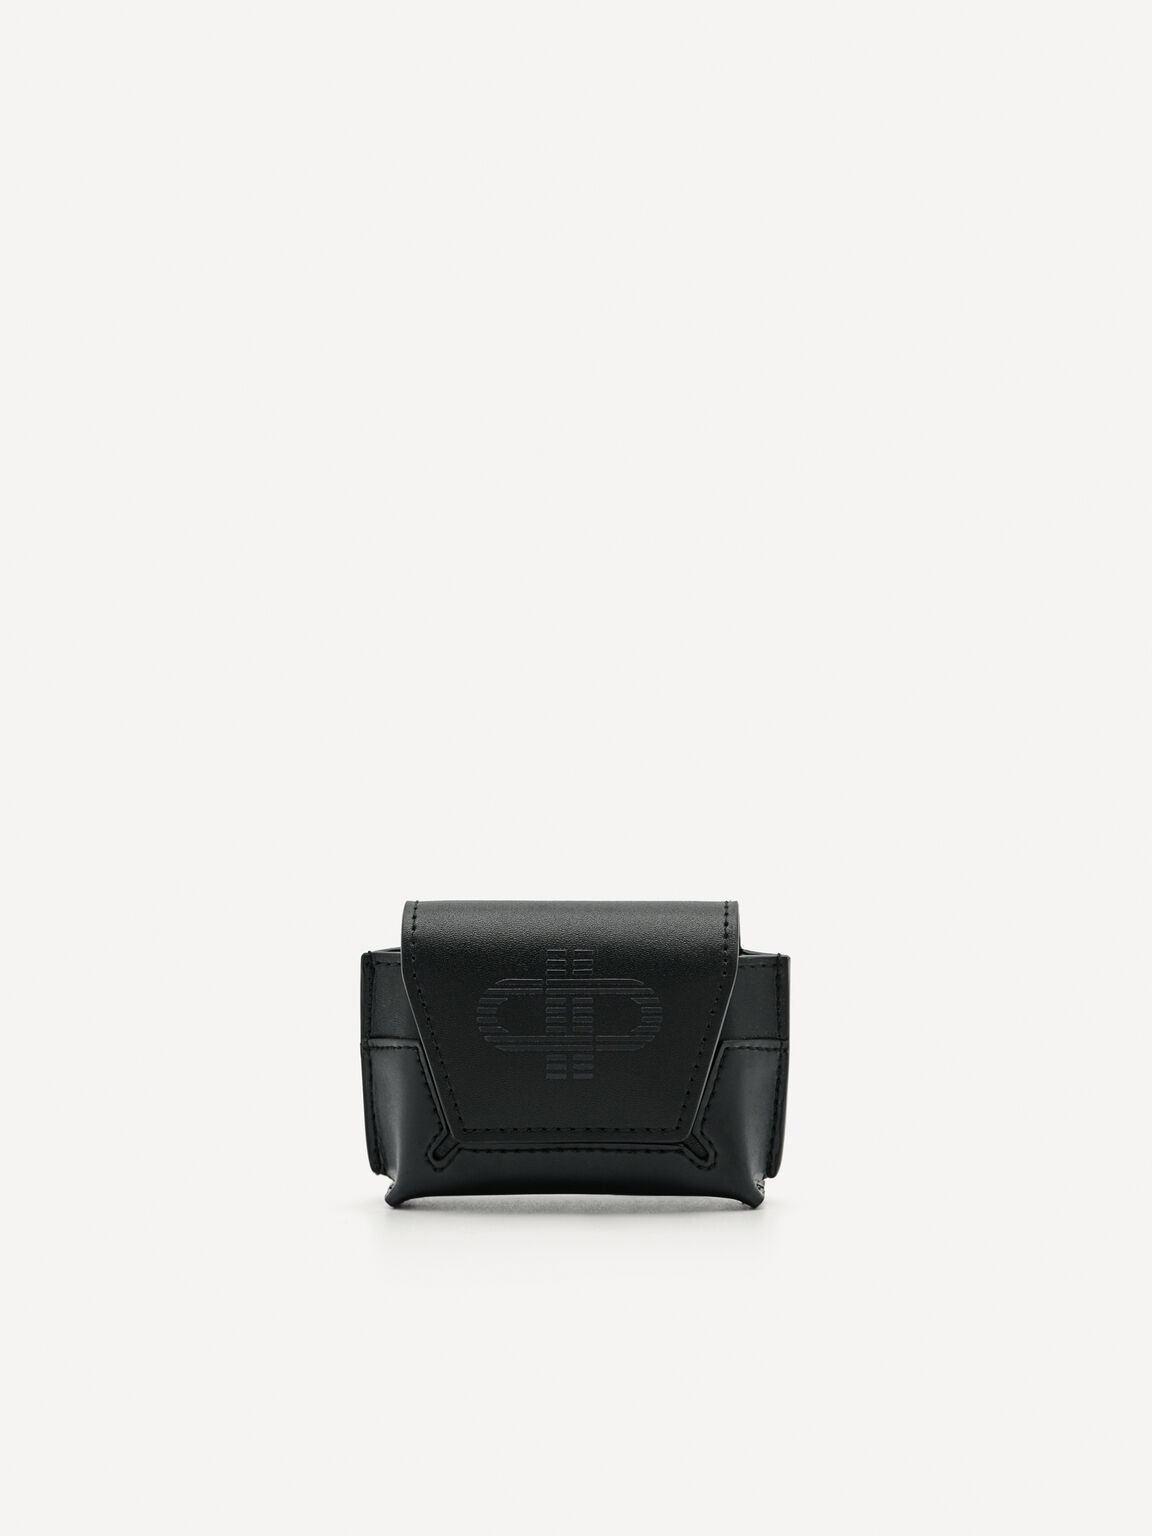 PEDRO Icon Leather Airpods Pro Case, Black, hi-res